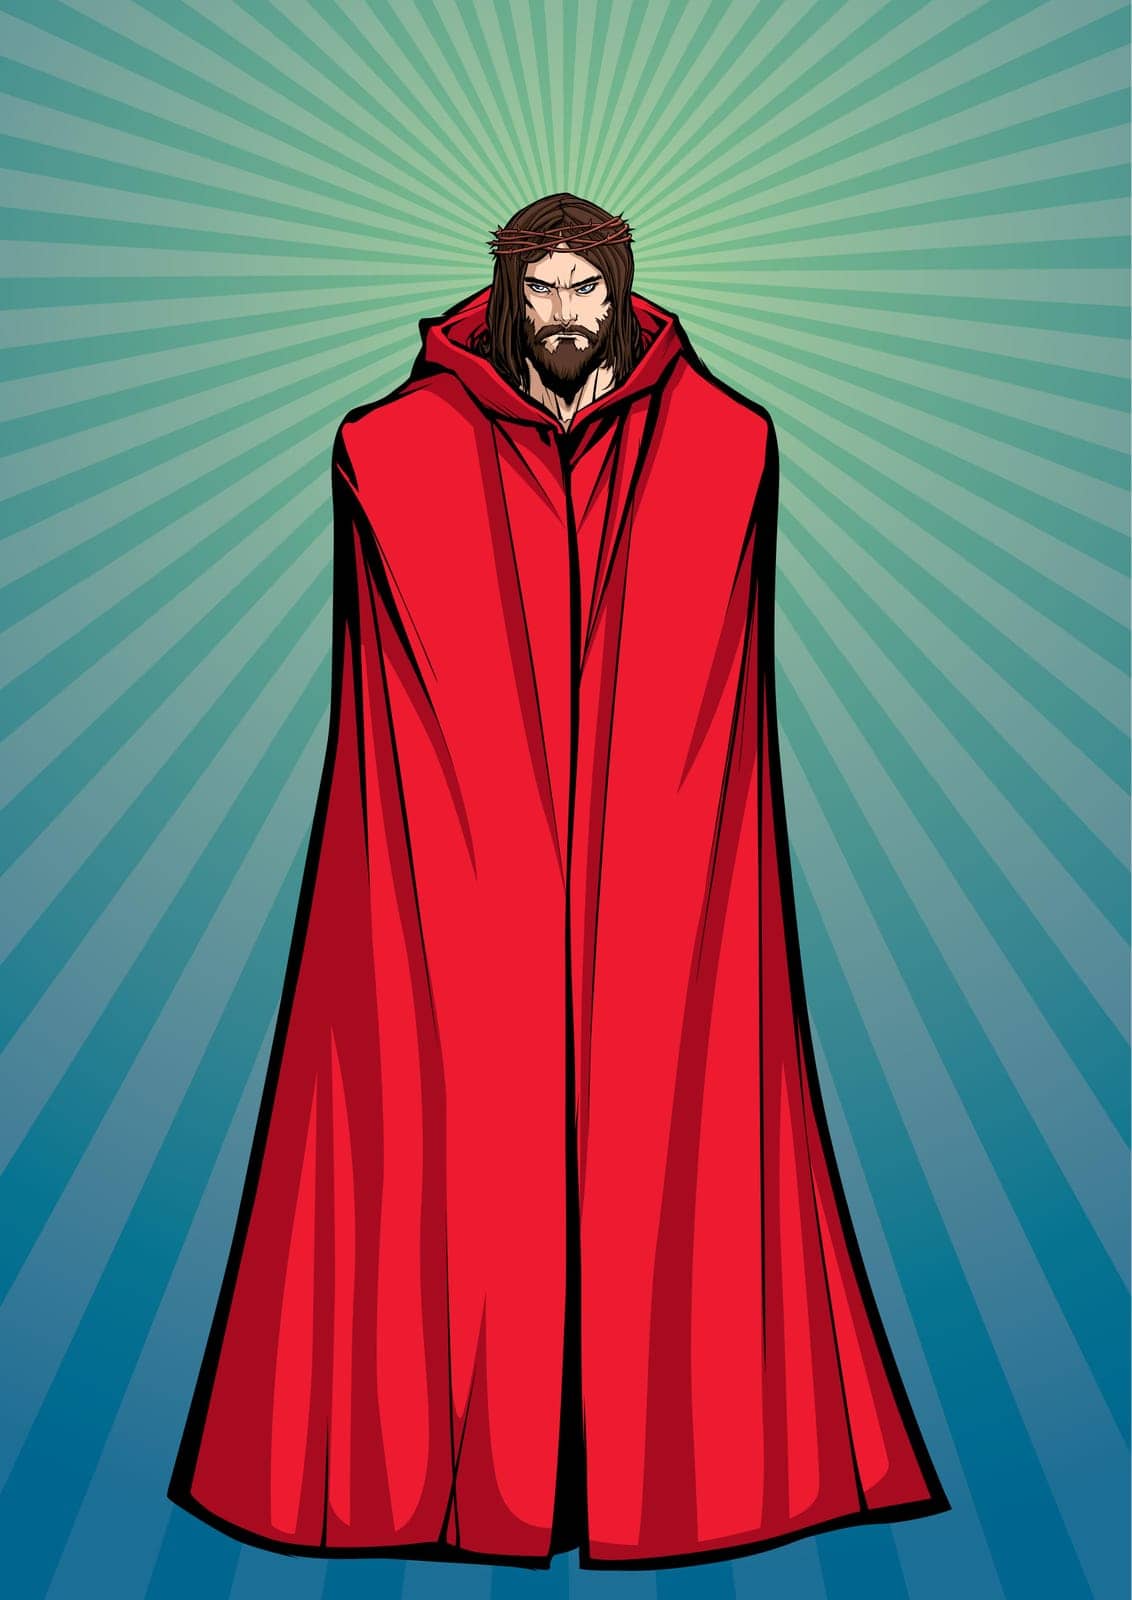 Jesus Superhero Standing Tall  by Malchev